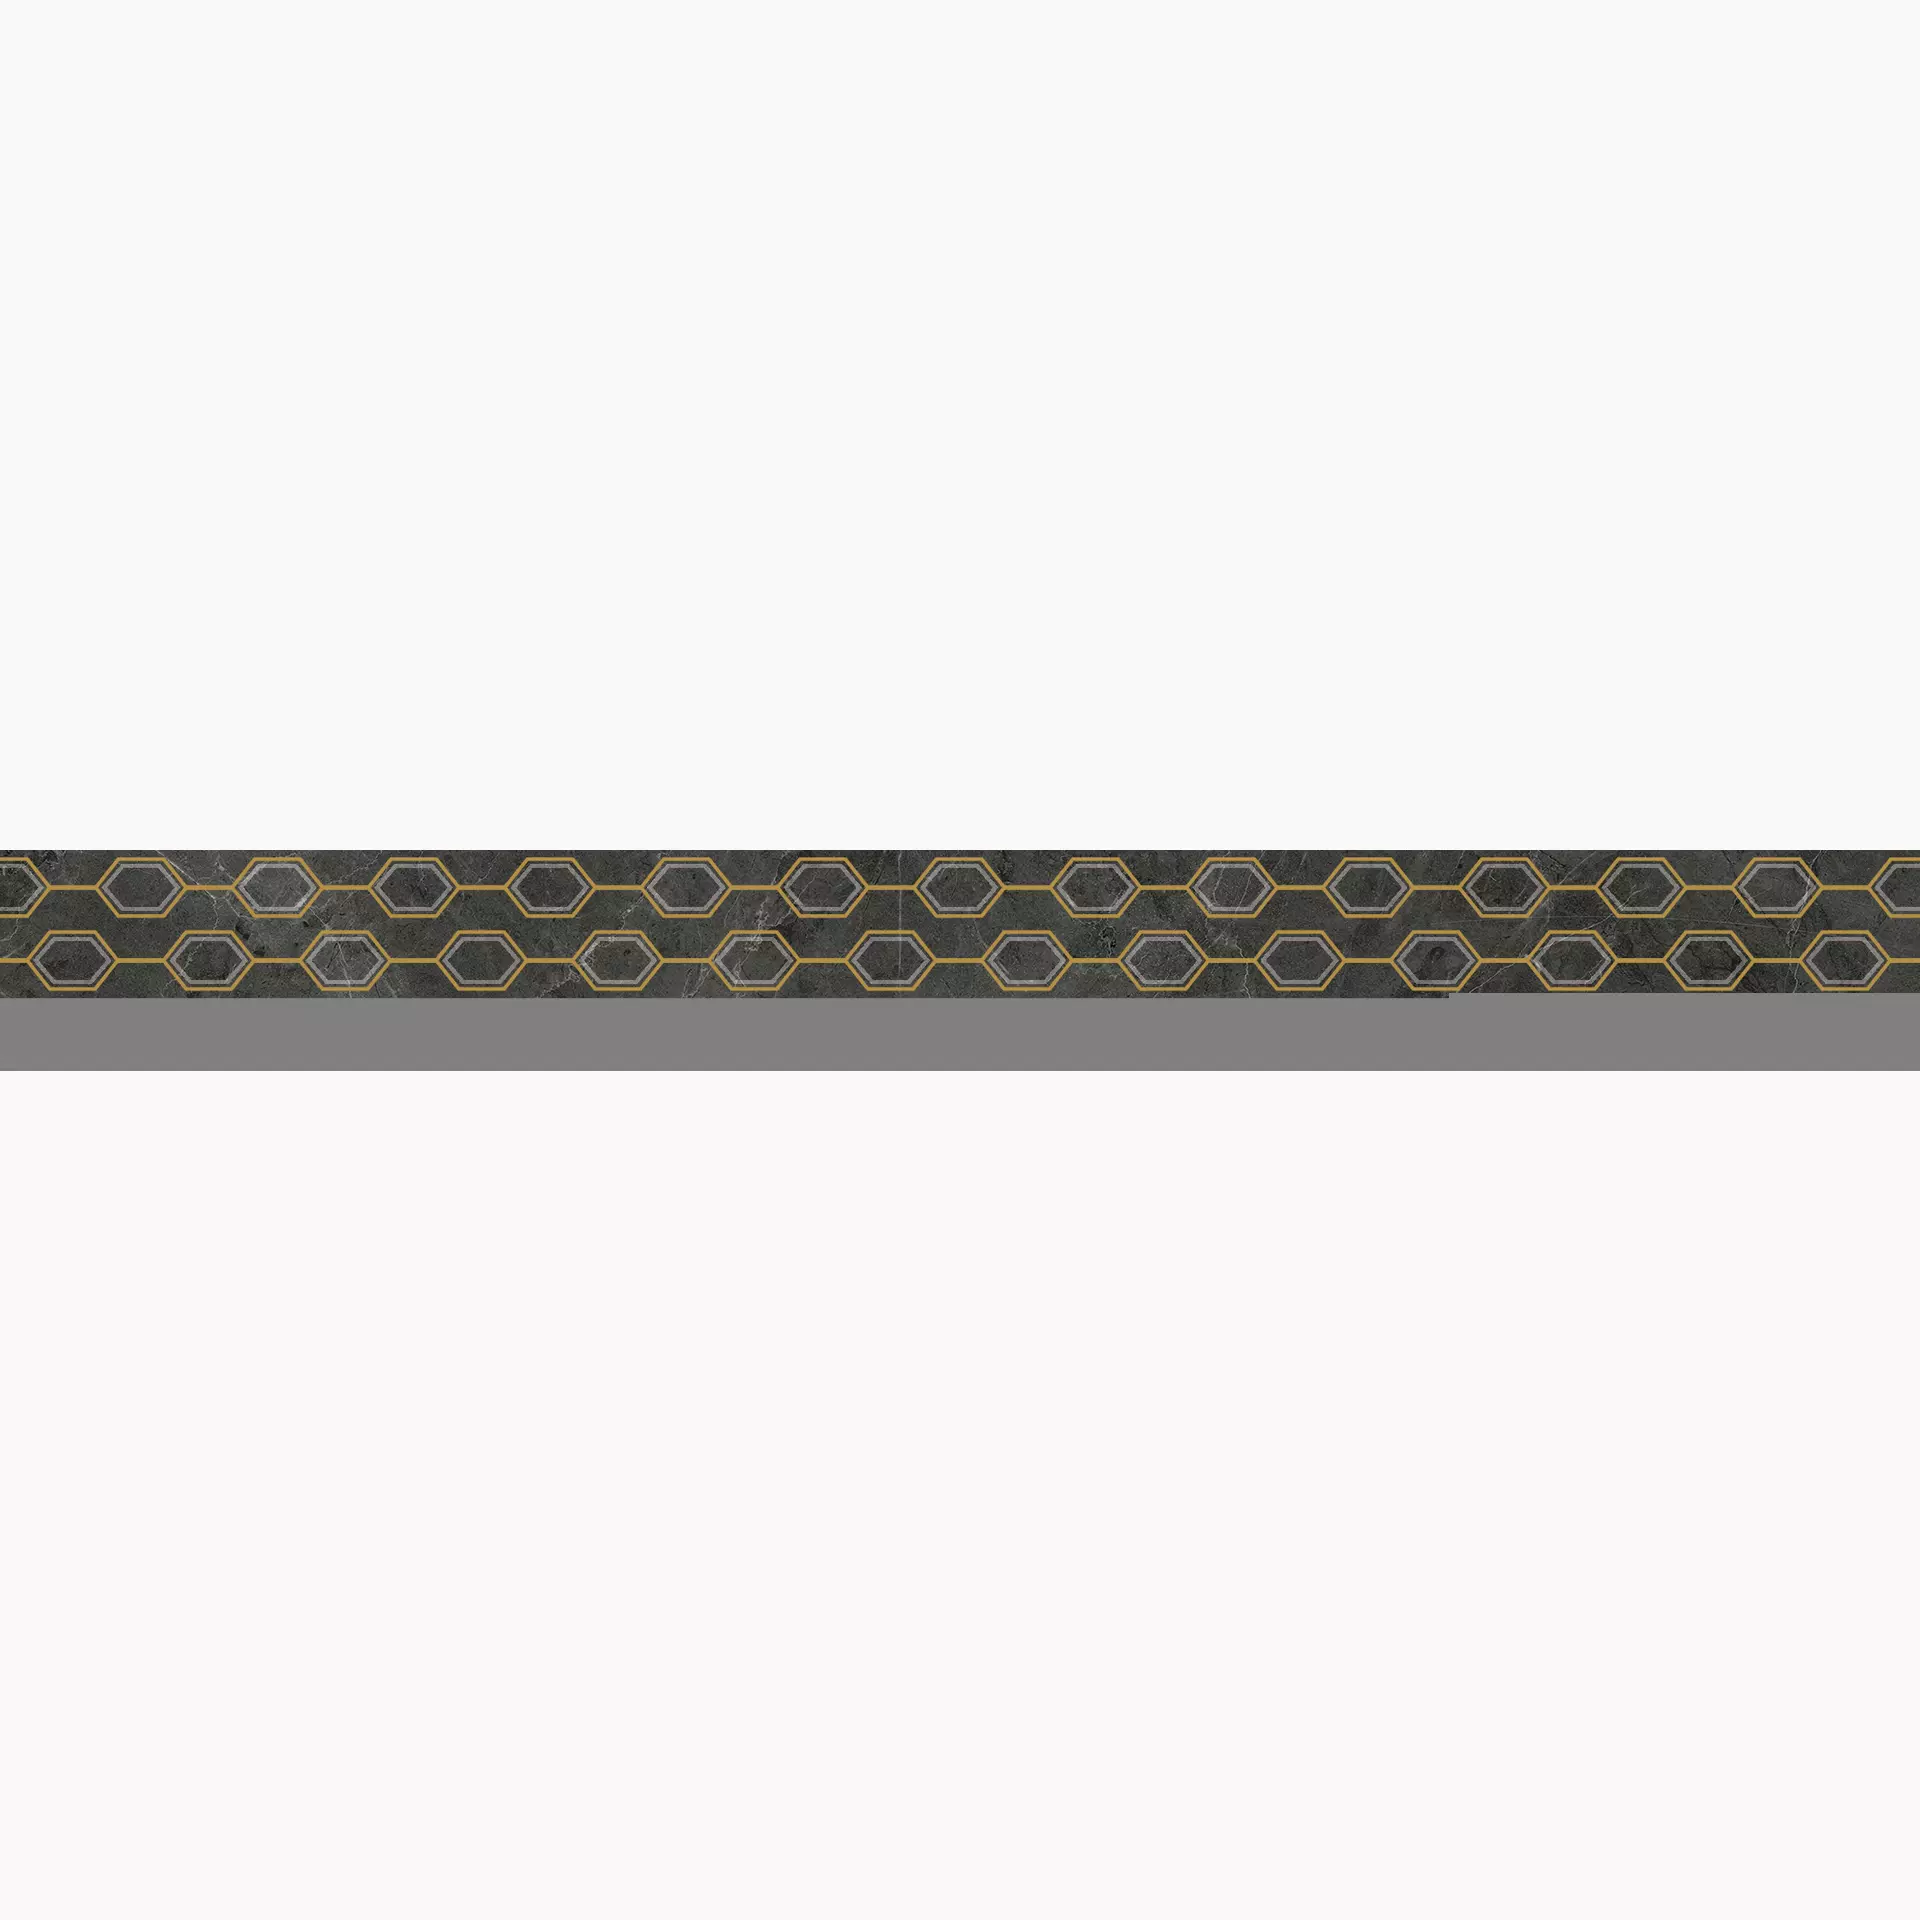 ABK Sensi Classic Oro Pietra Grey Lux Border Chains 1SL03201 7x60cm rectified 8,5mm